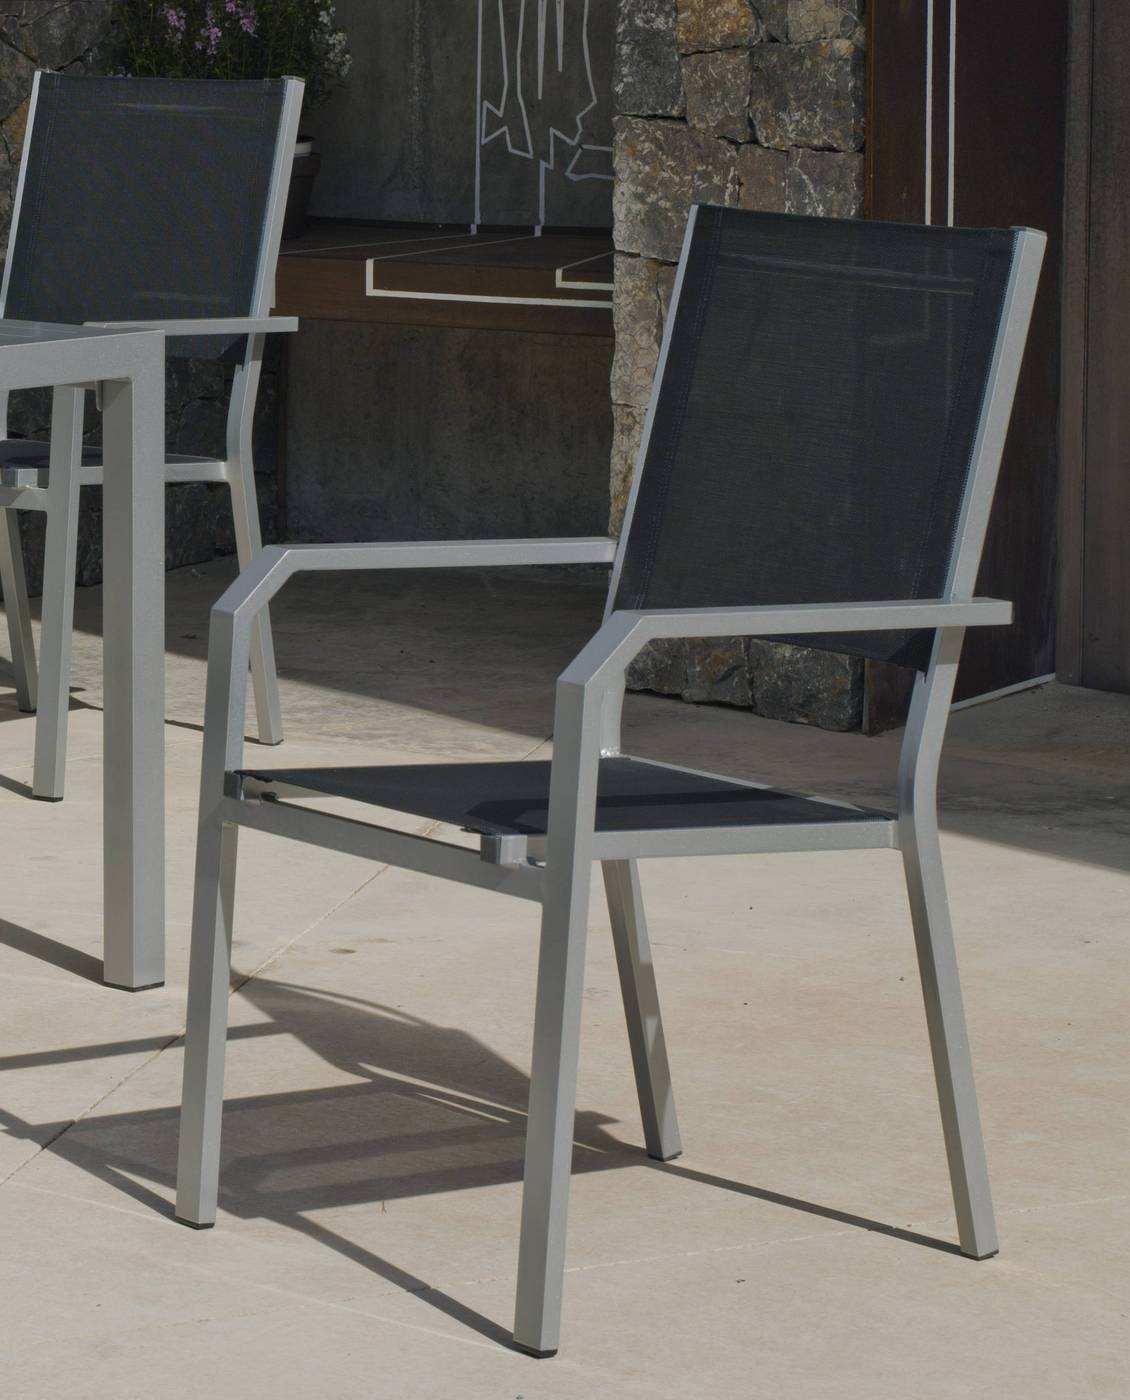 Set Aluminio Palma-Gema 200-8 - Conjunto aluminio luxe: Mesa rectangular 200 cm + 8 sillones de textilen. Disponible en color blanco, plata, bronce, antracita y champagne.